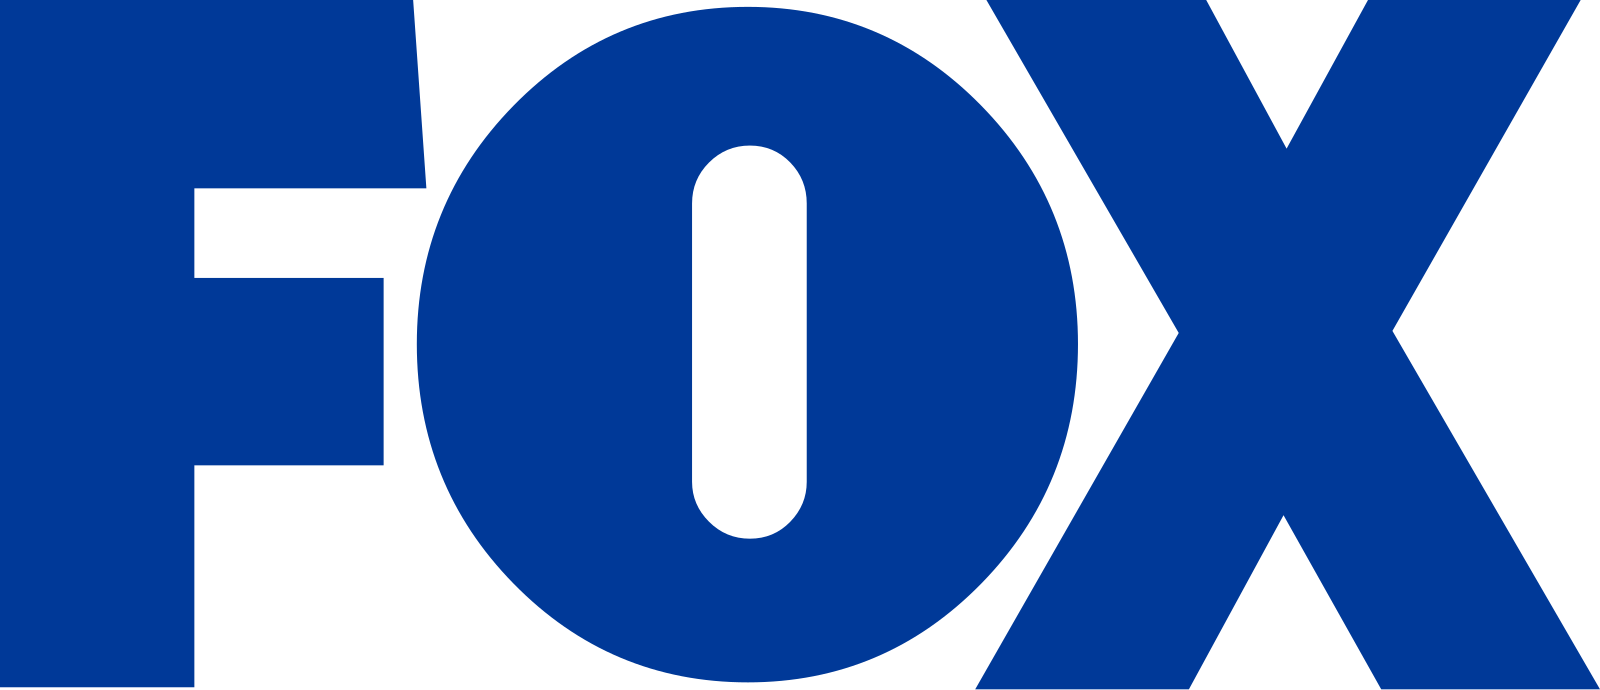 Fox logo.svg